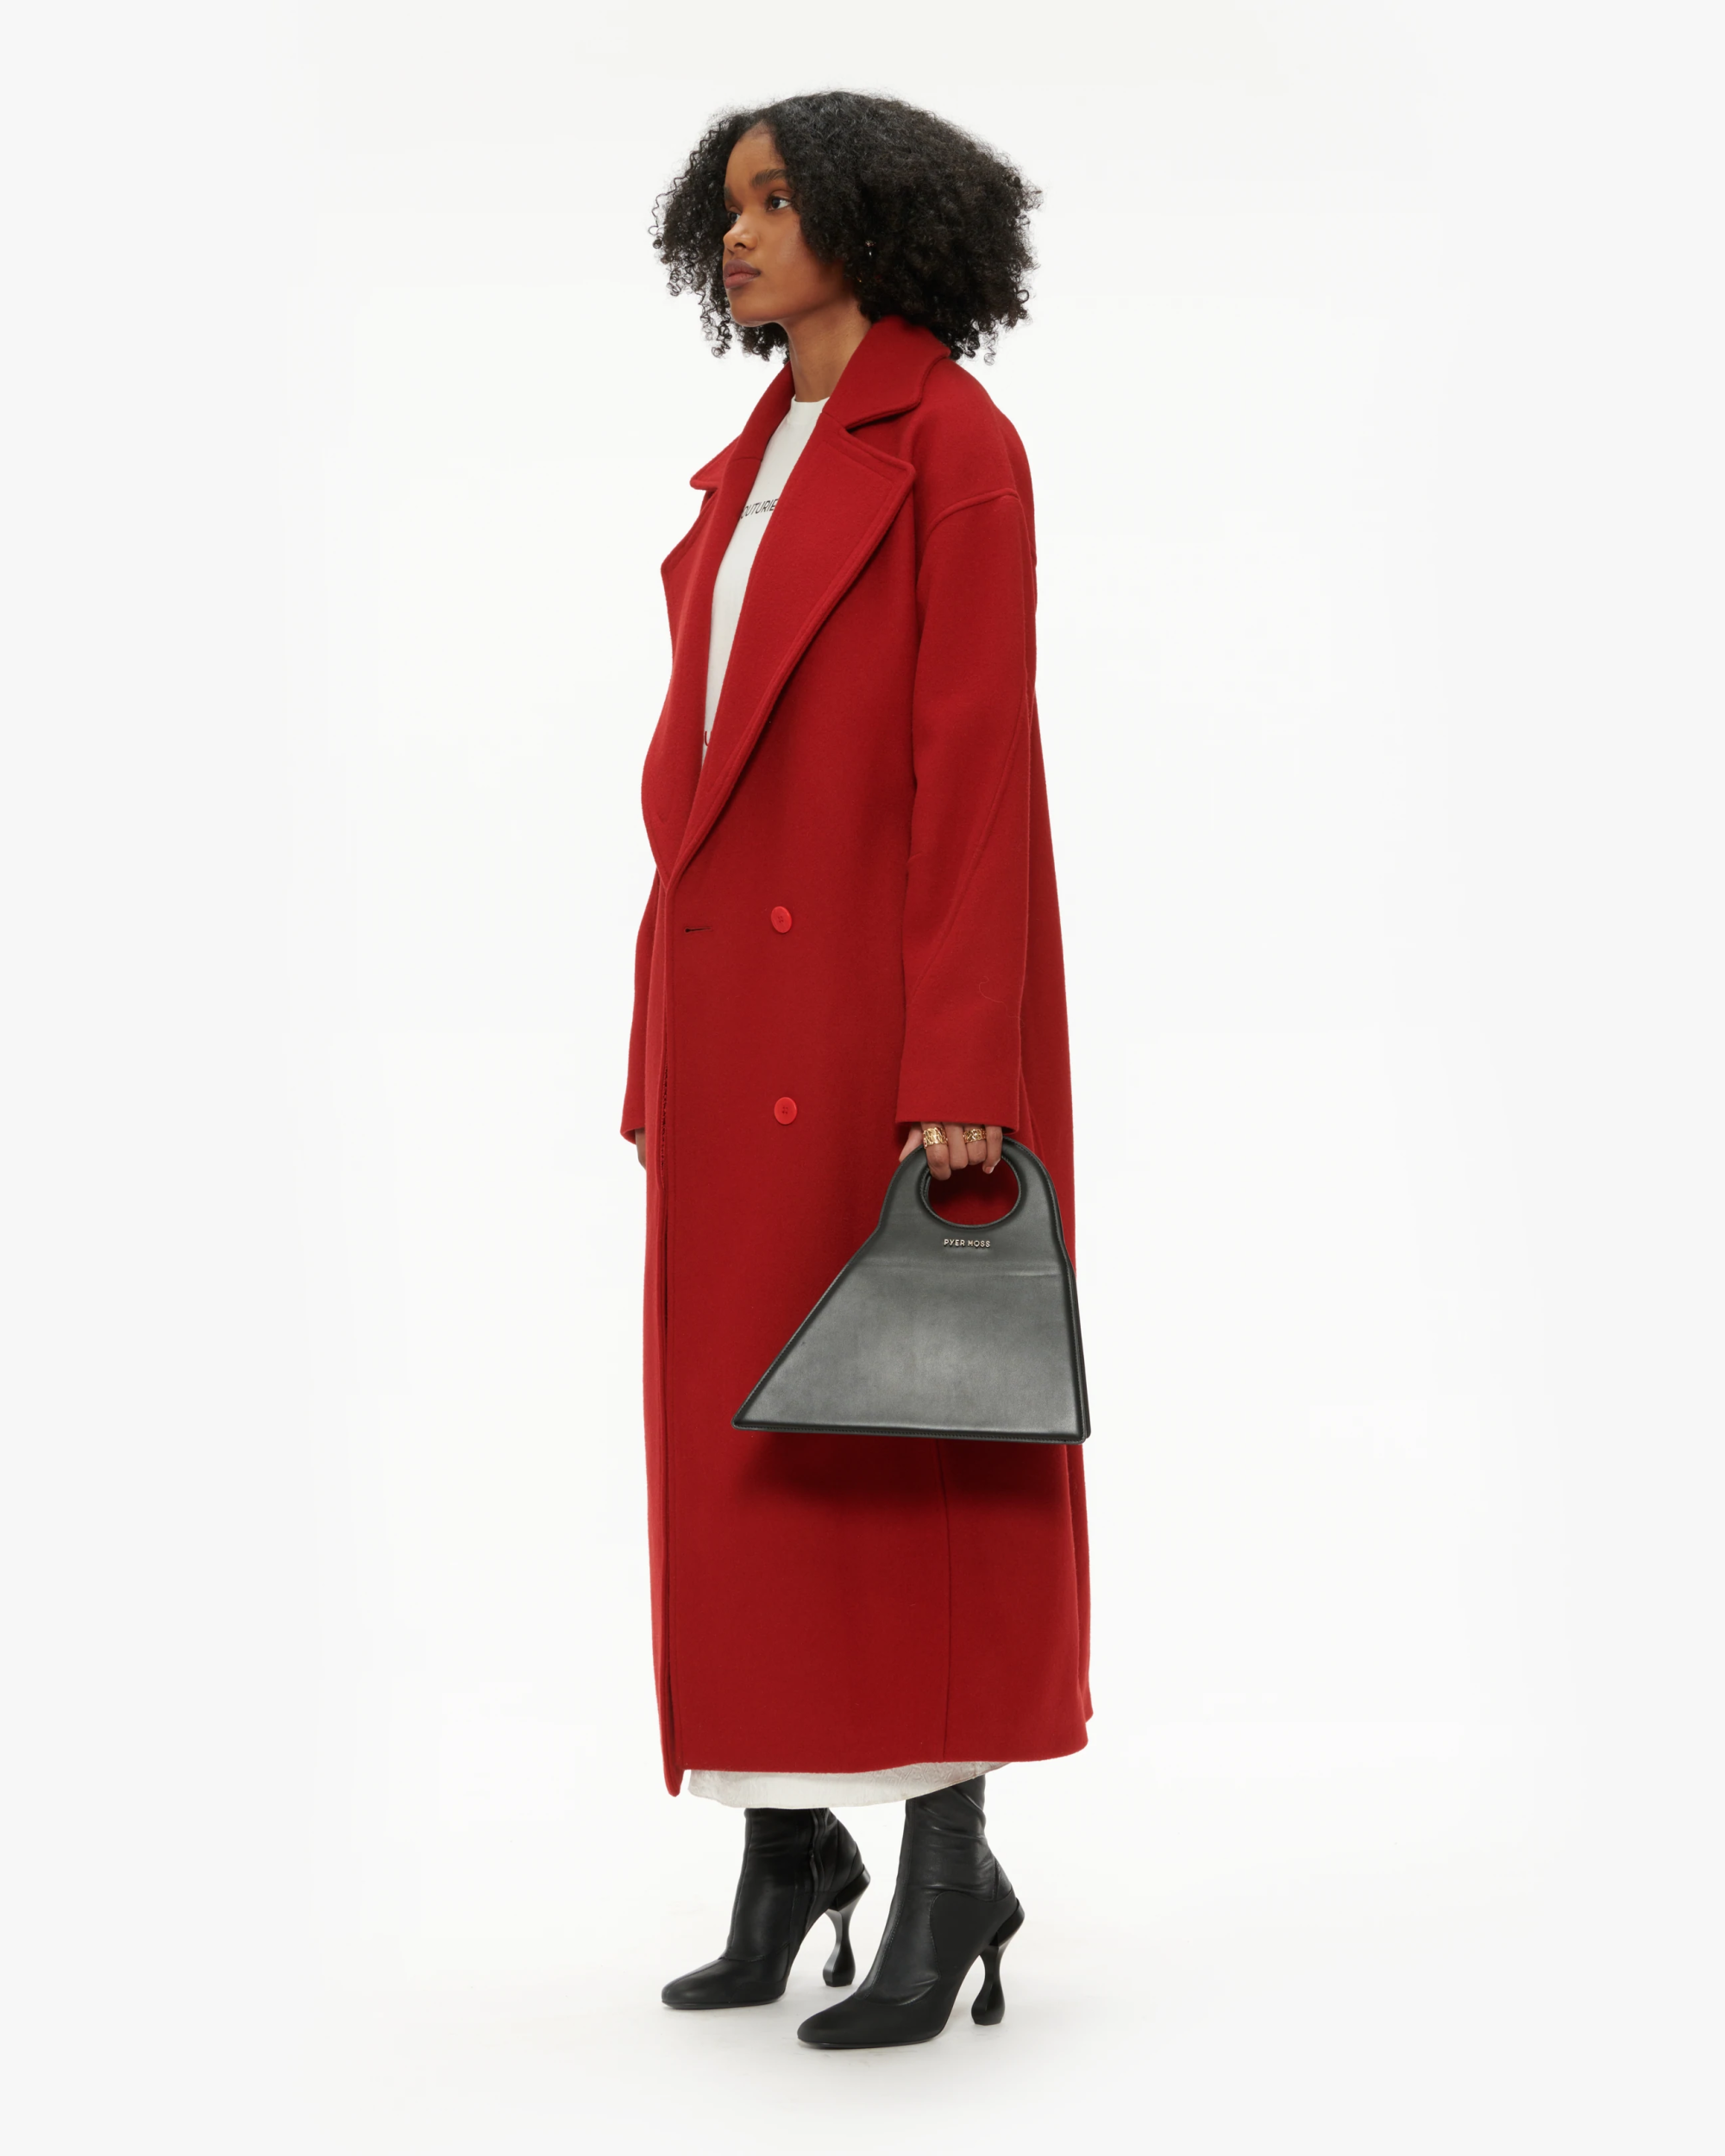 Model in a red overcoat holding a black Pyer Moss handbag